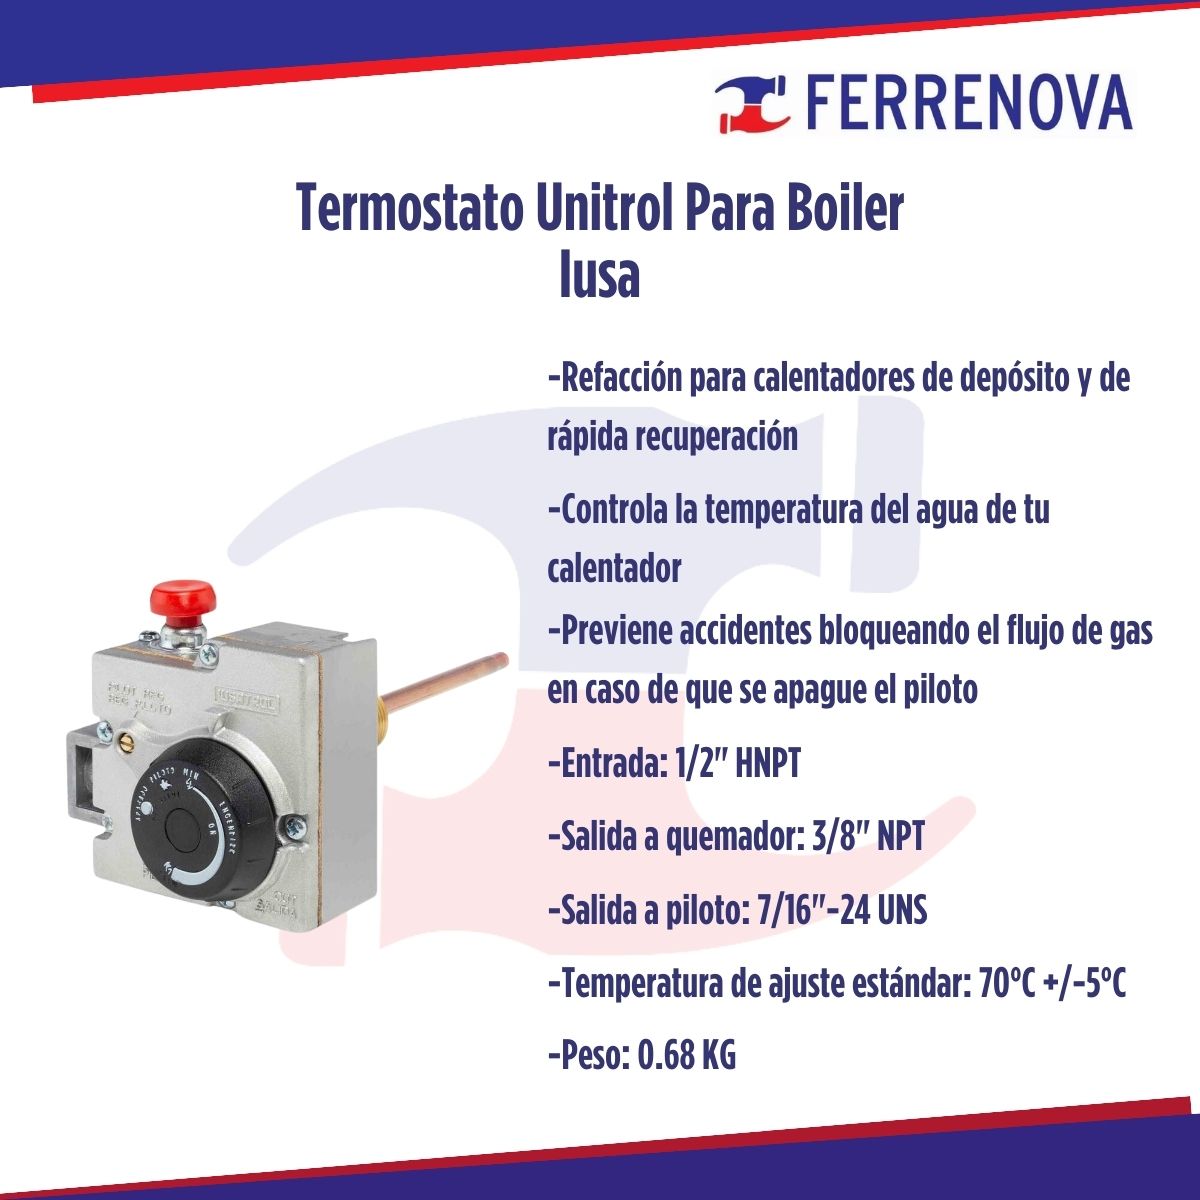 Termostato Unitrol Para Boiler Iusa